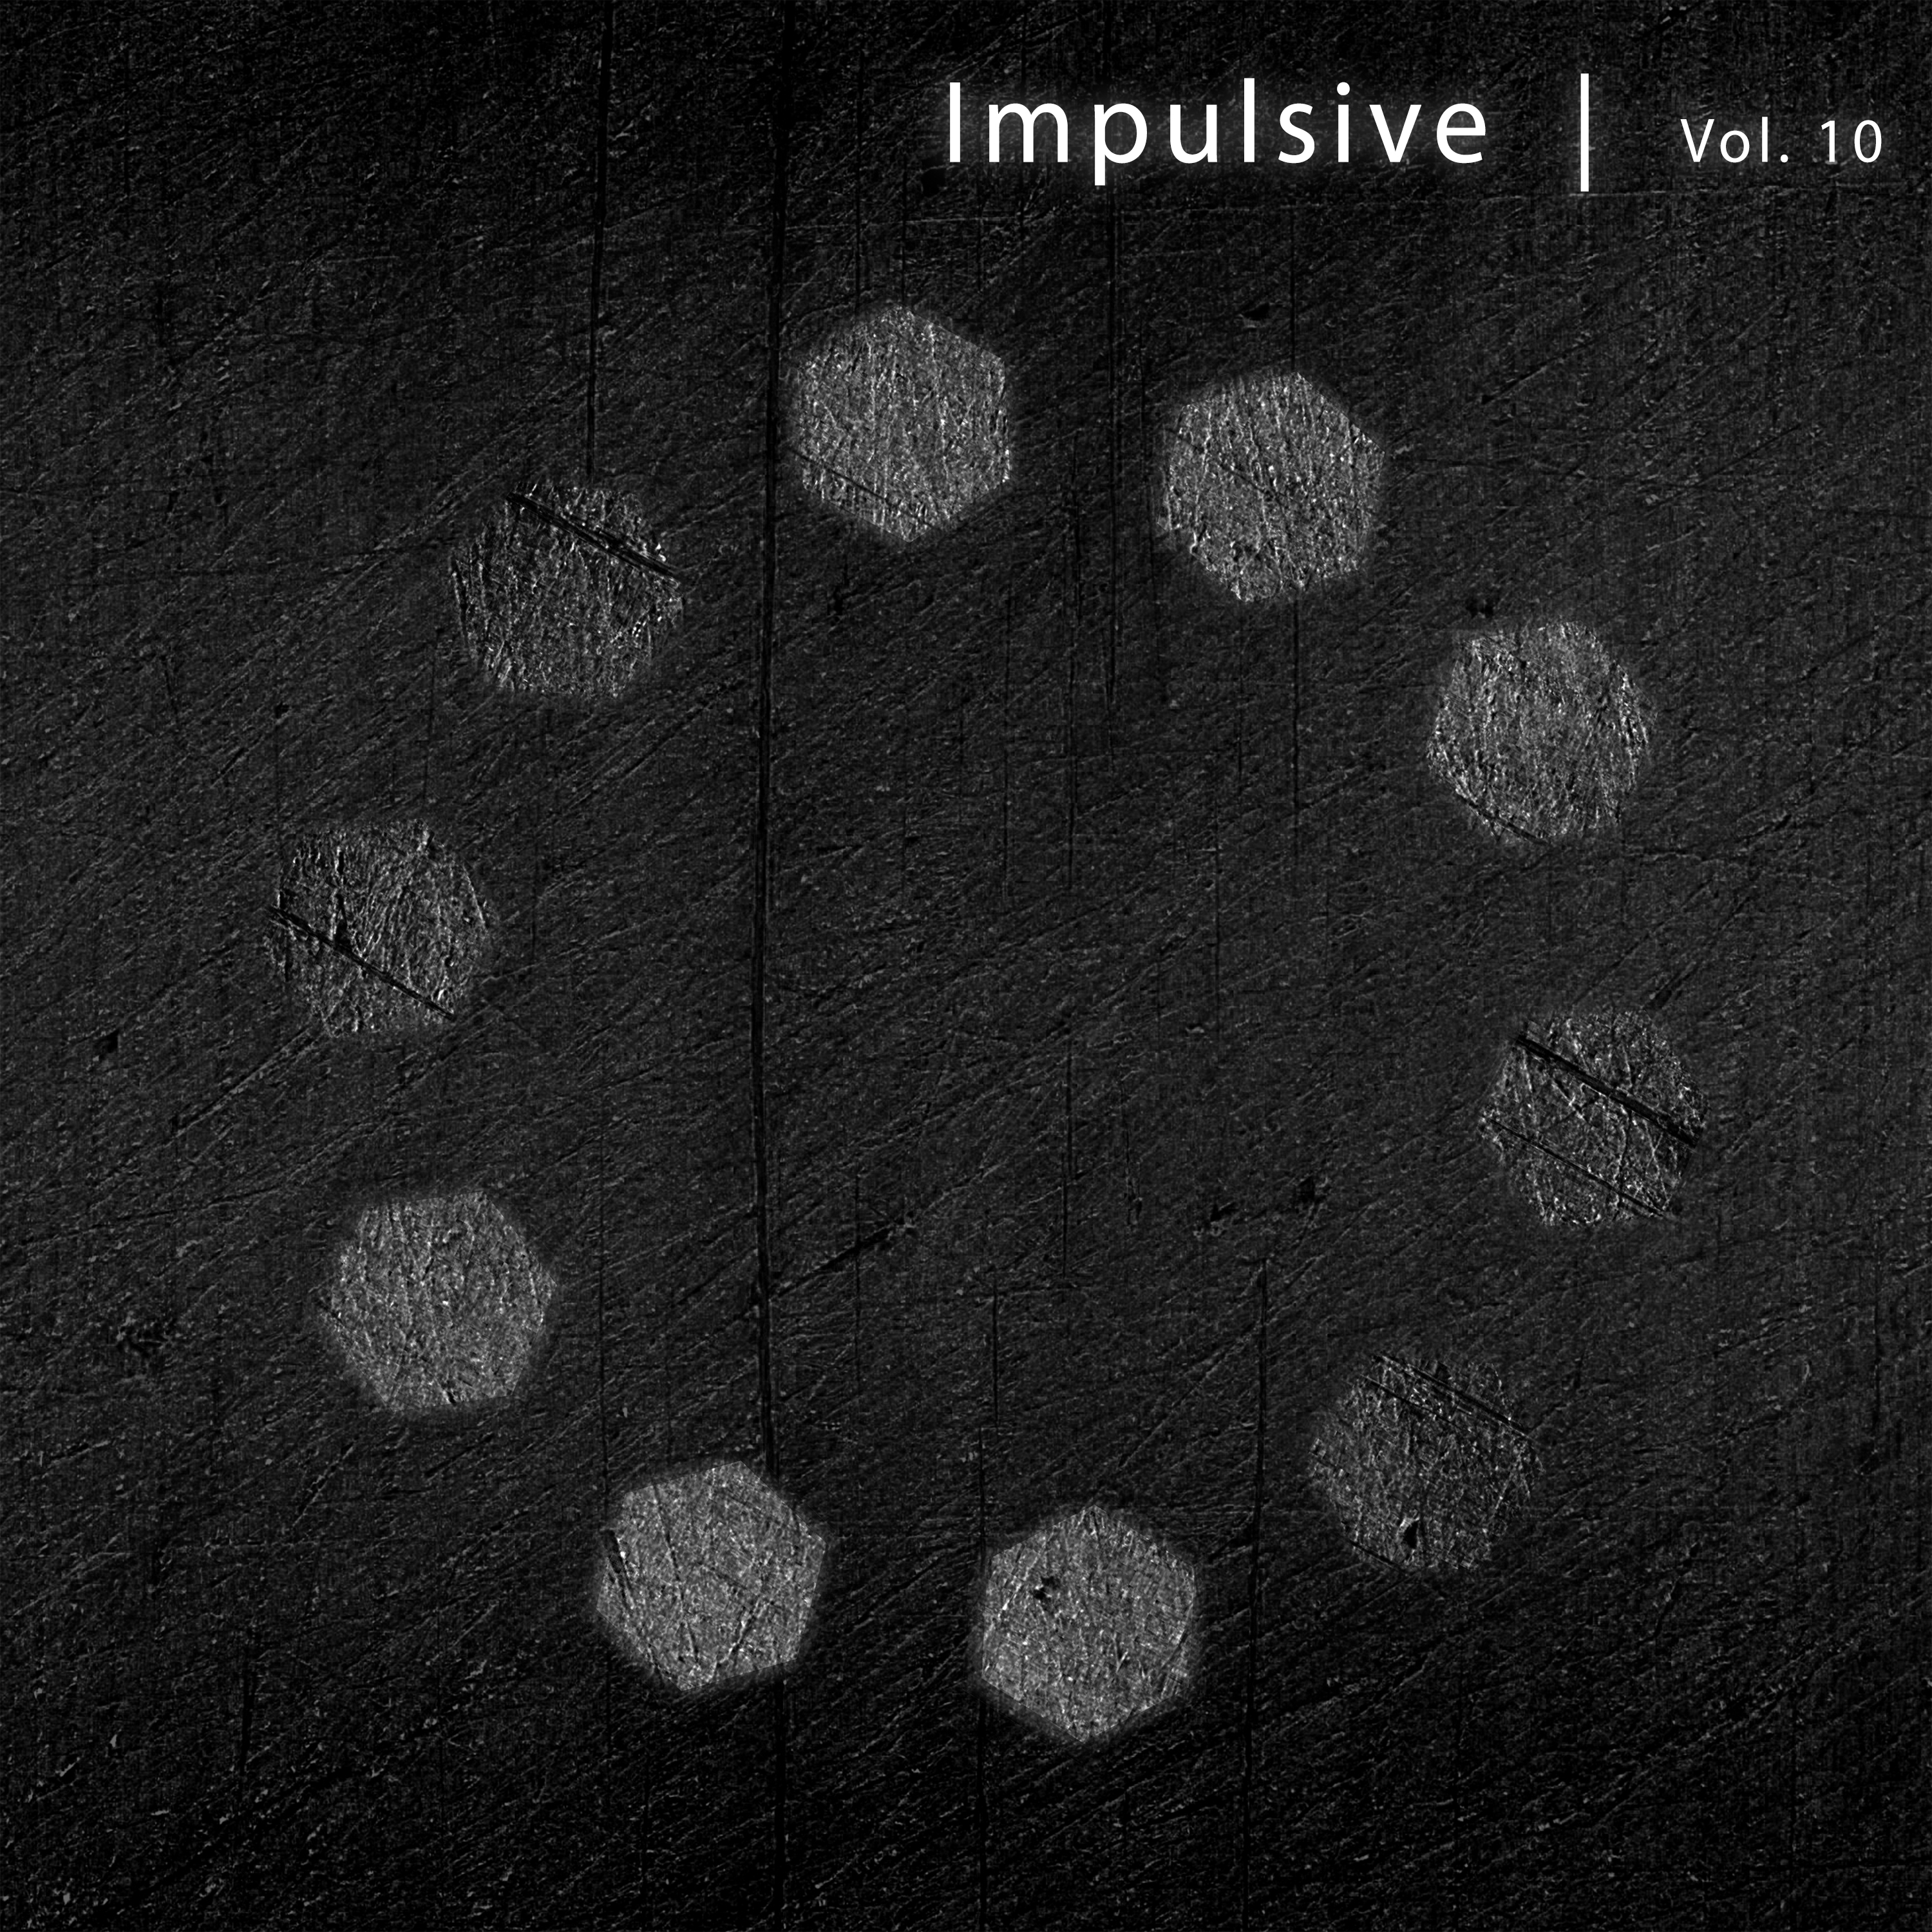 Impulsive, Vol. 10